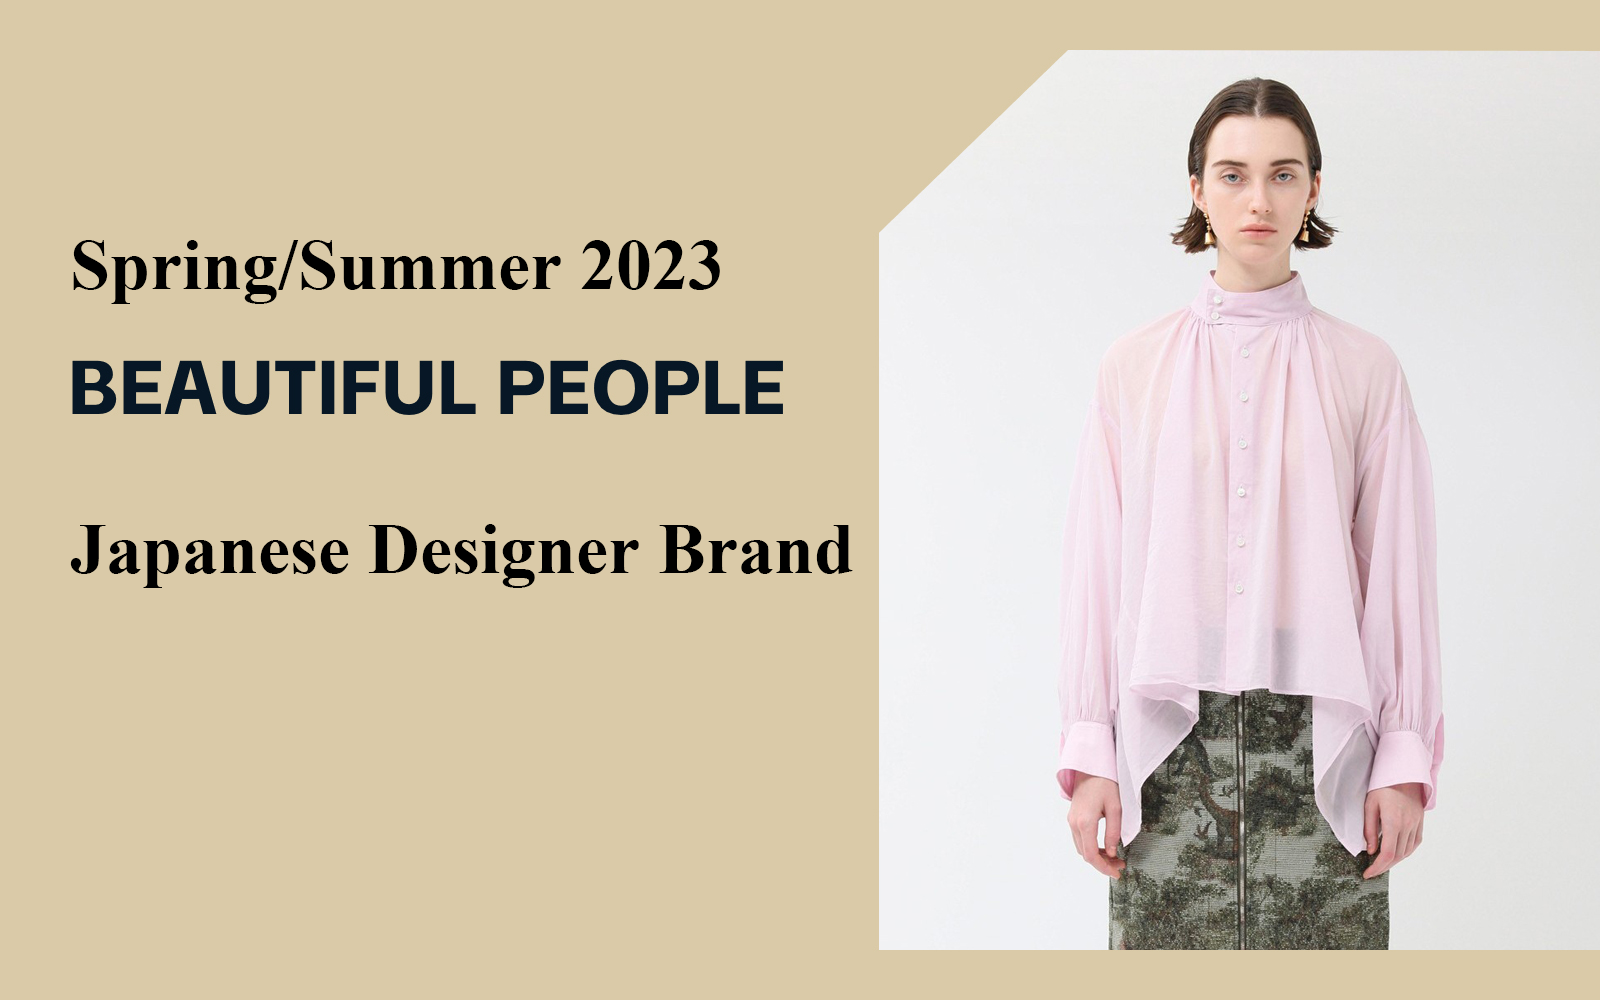 The Analysis of Beautiful People The Japanese Designer Brand